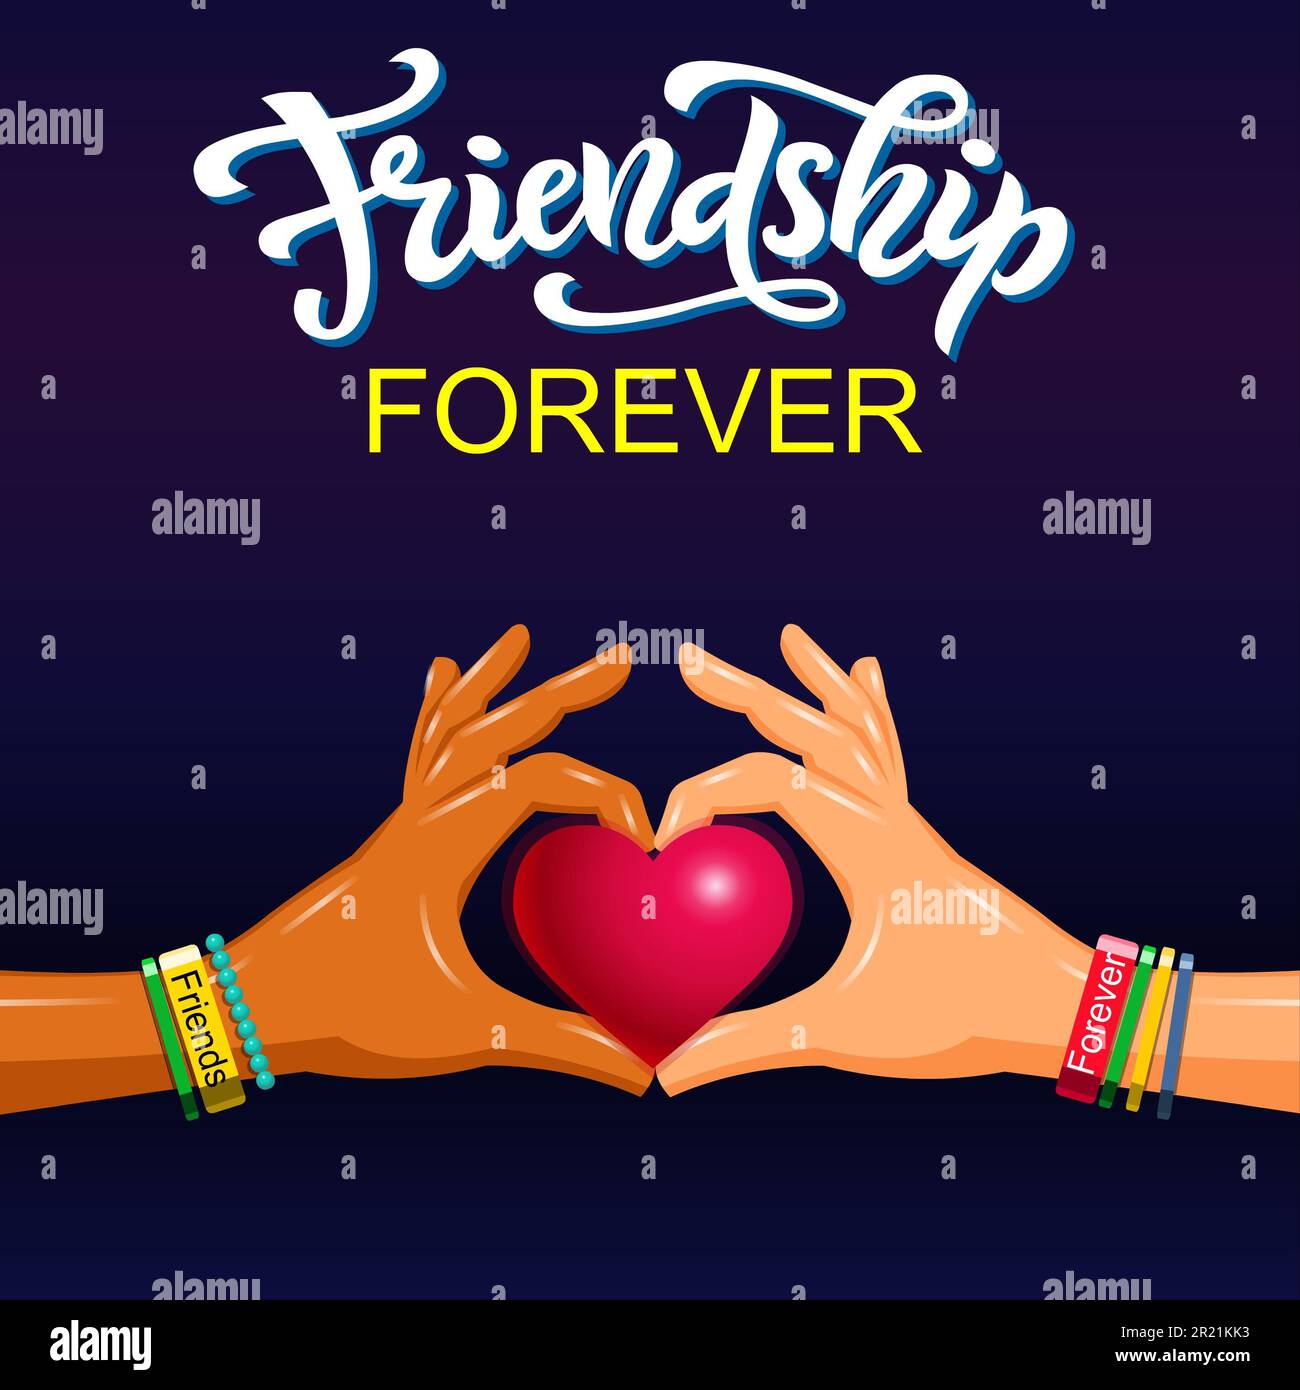 Happy Friendship Day - Friendship Forever Stock Photo